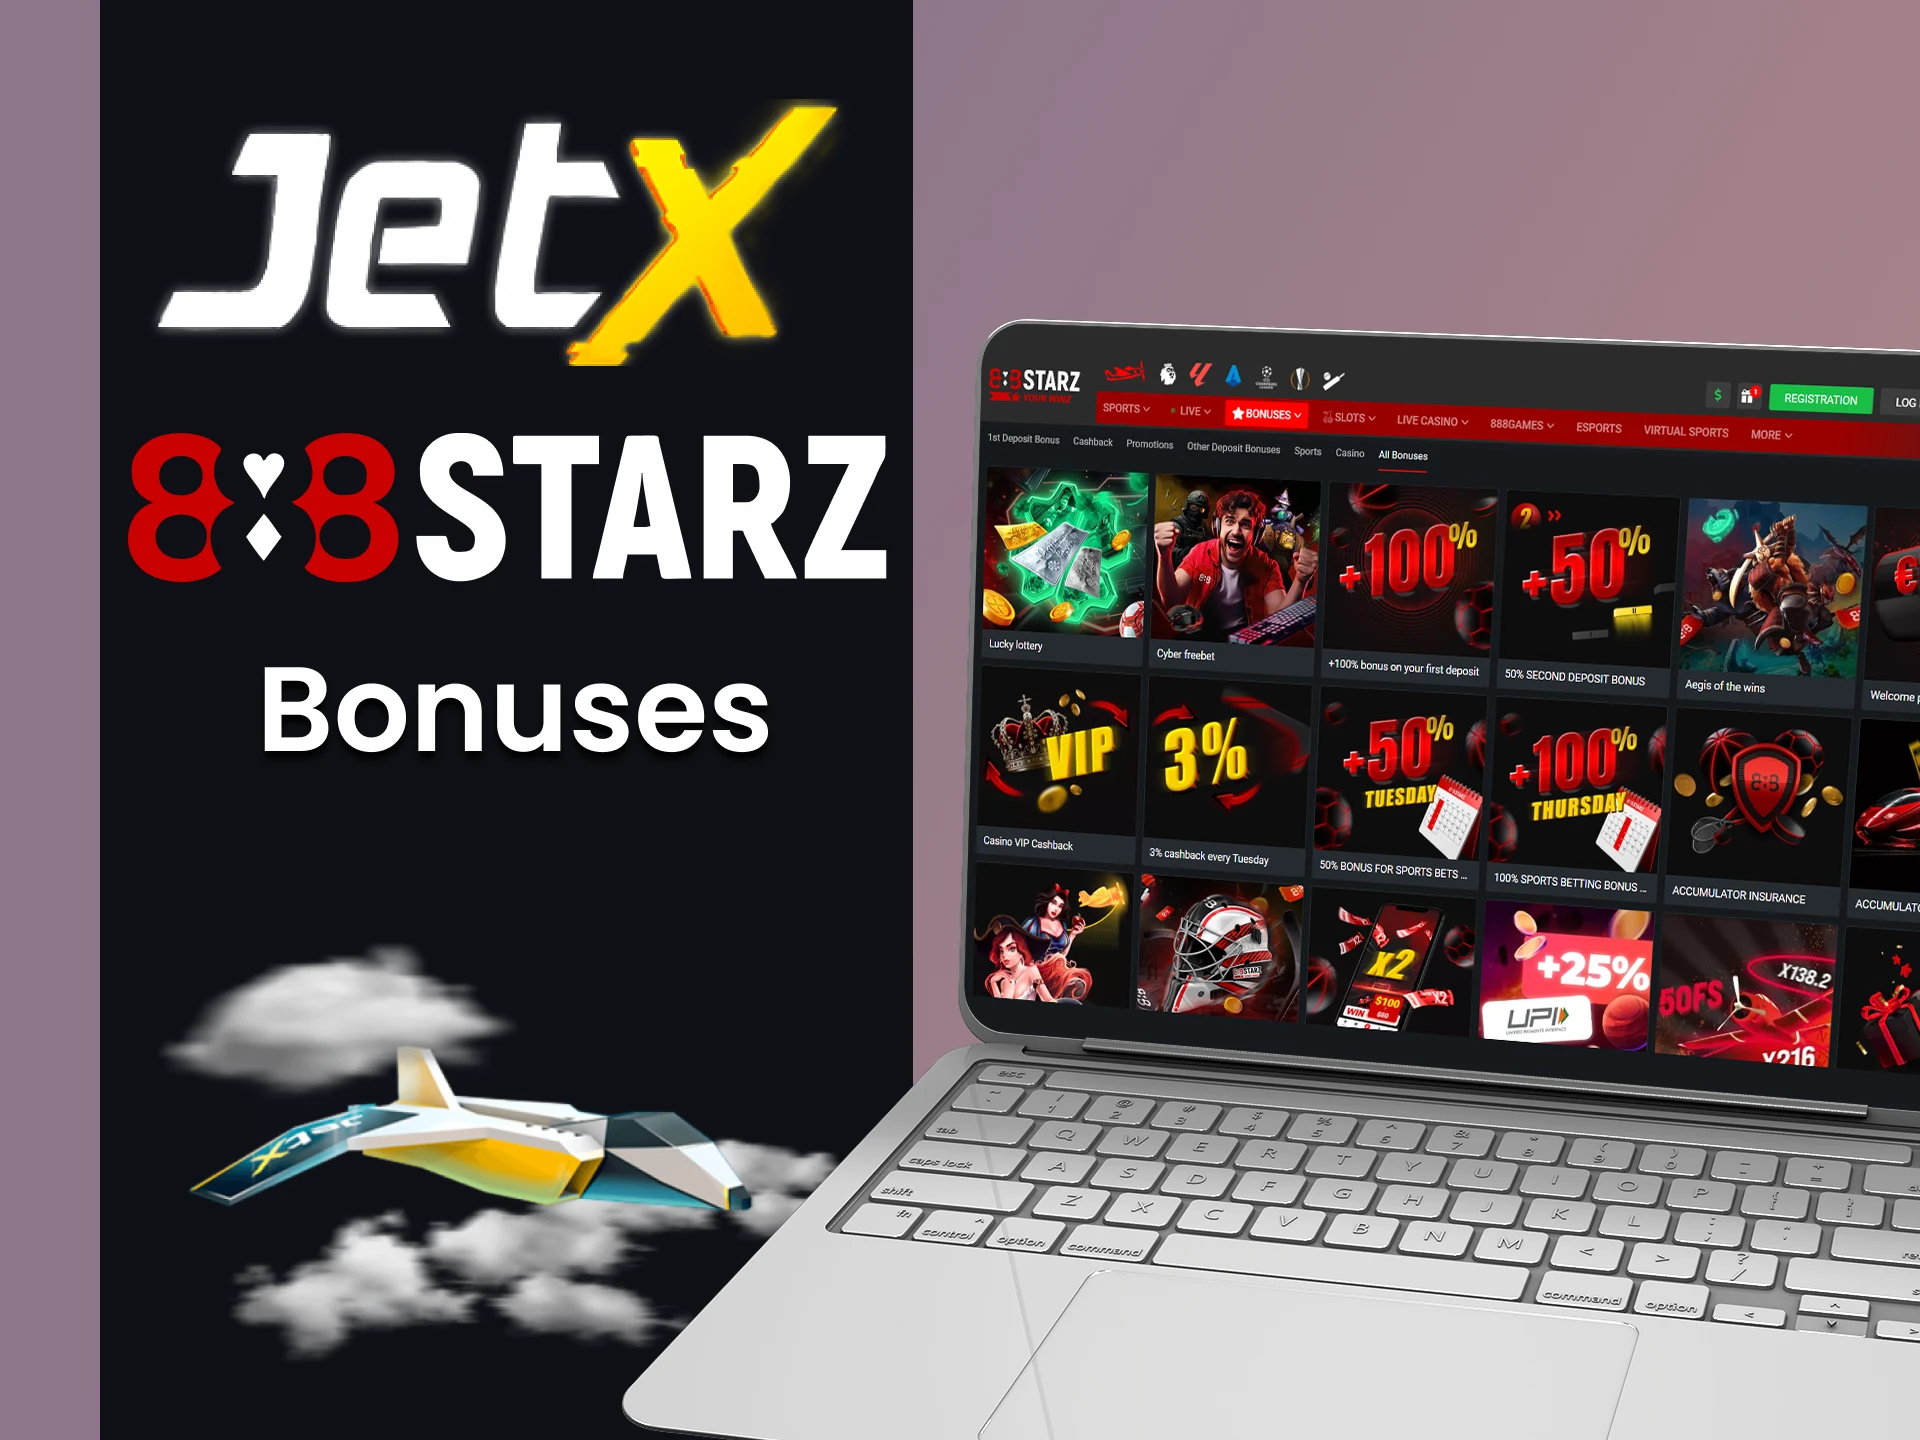 Claim lots of bonuses for JetX at 888starz.